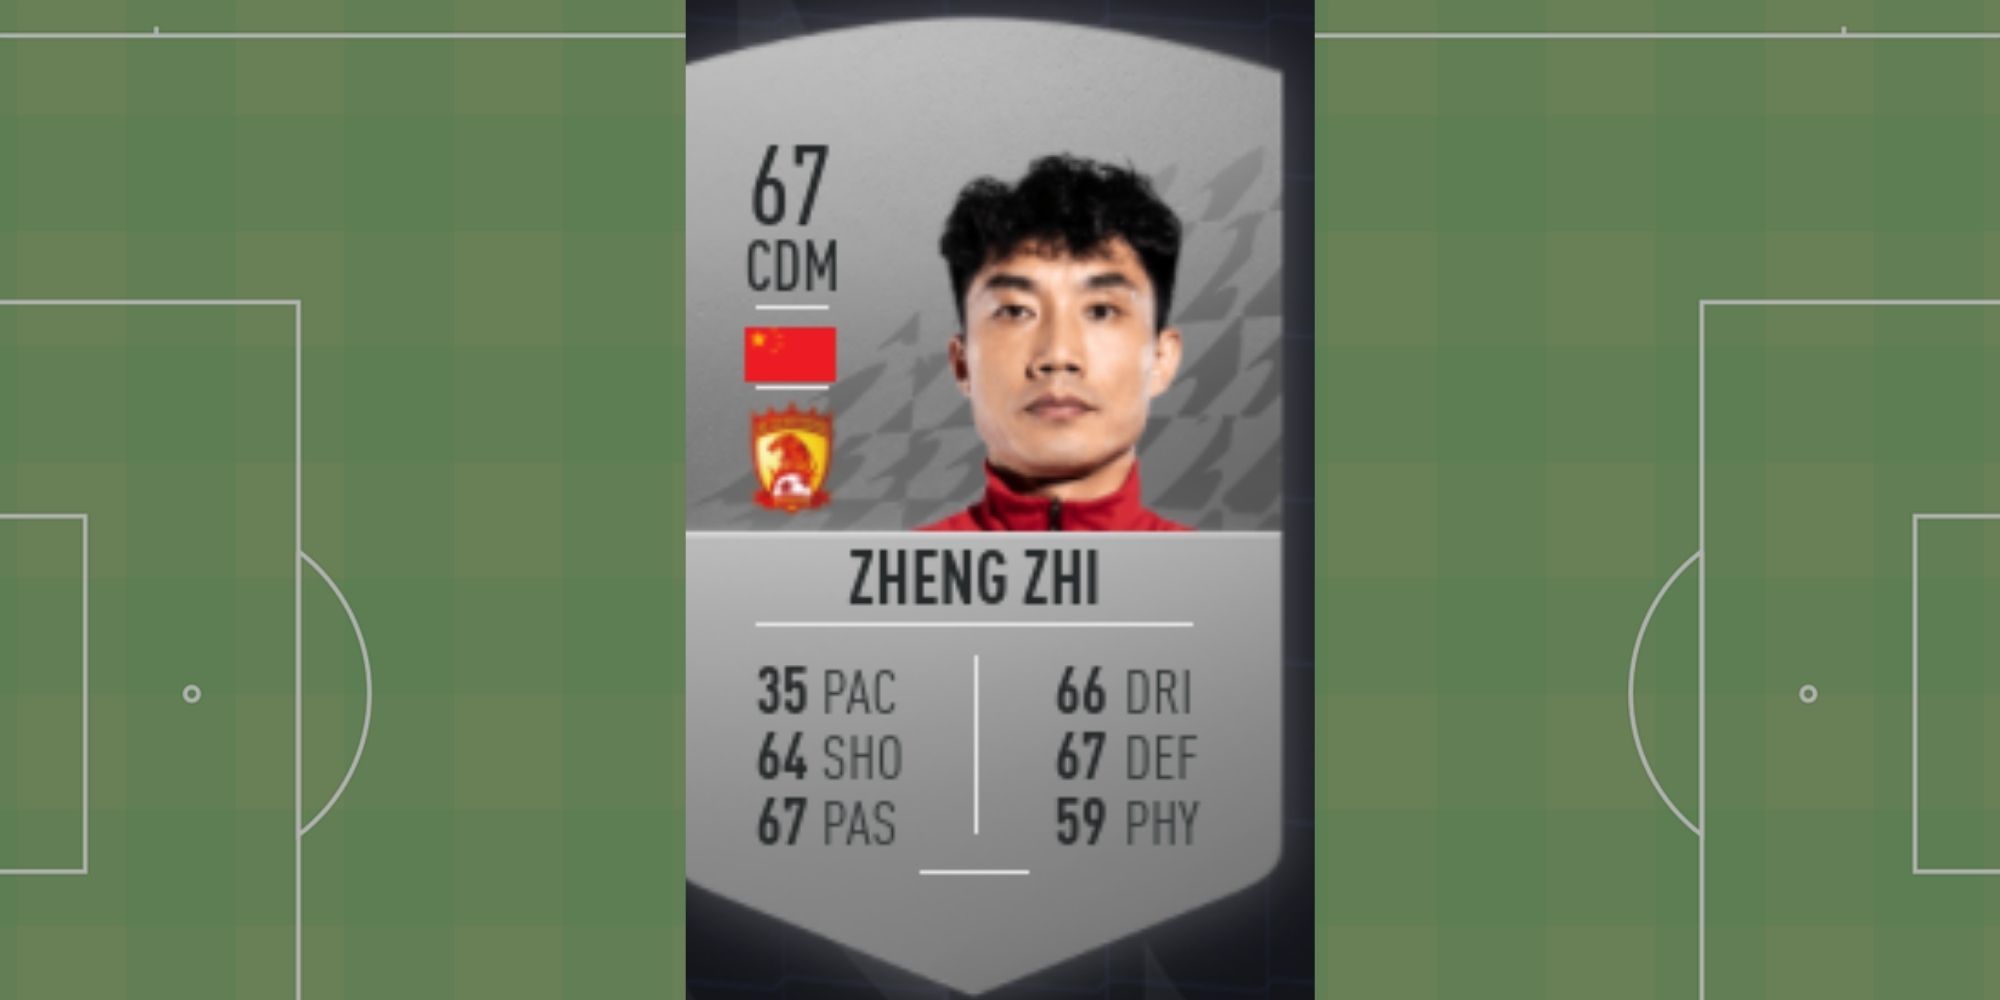 Zheng Zhi's FUT card on FIFA 22. 